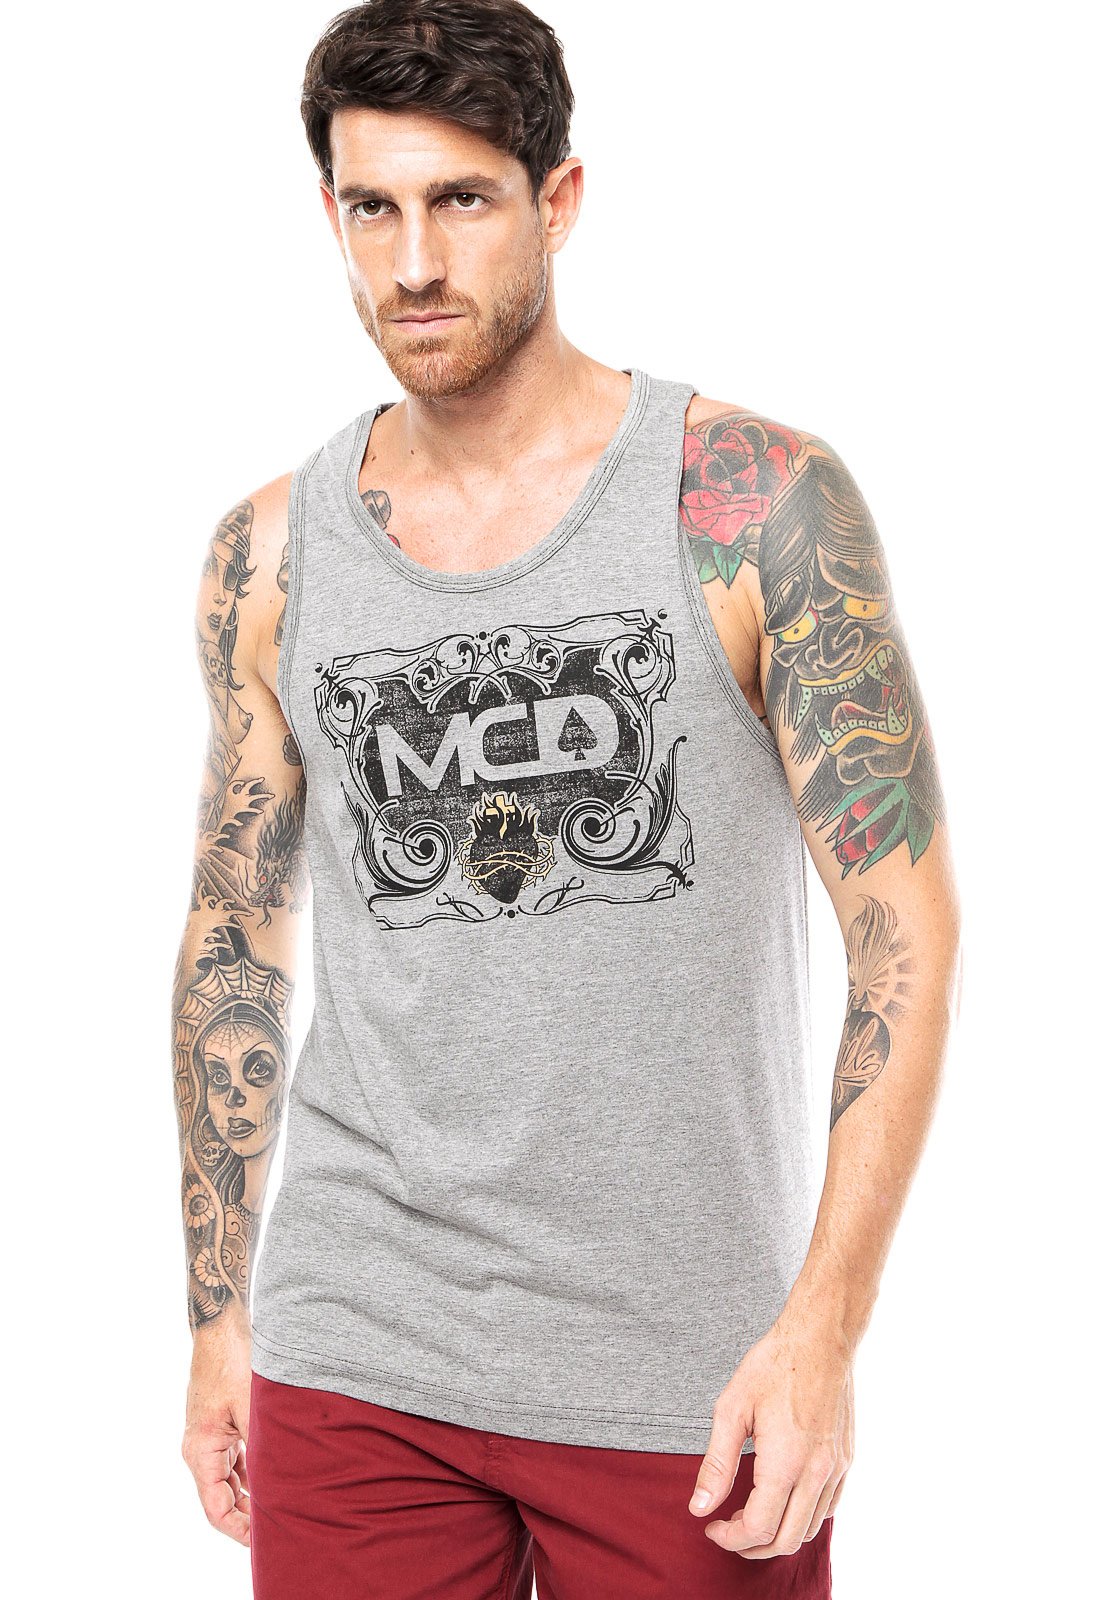 garden Disturbance development of player Ministry brand name camiseta regata masculina mcd - wearesofrito.com